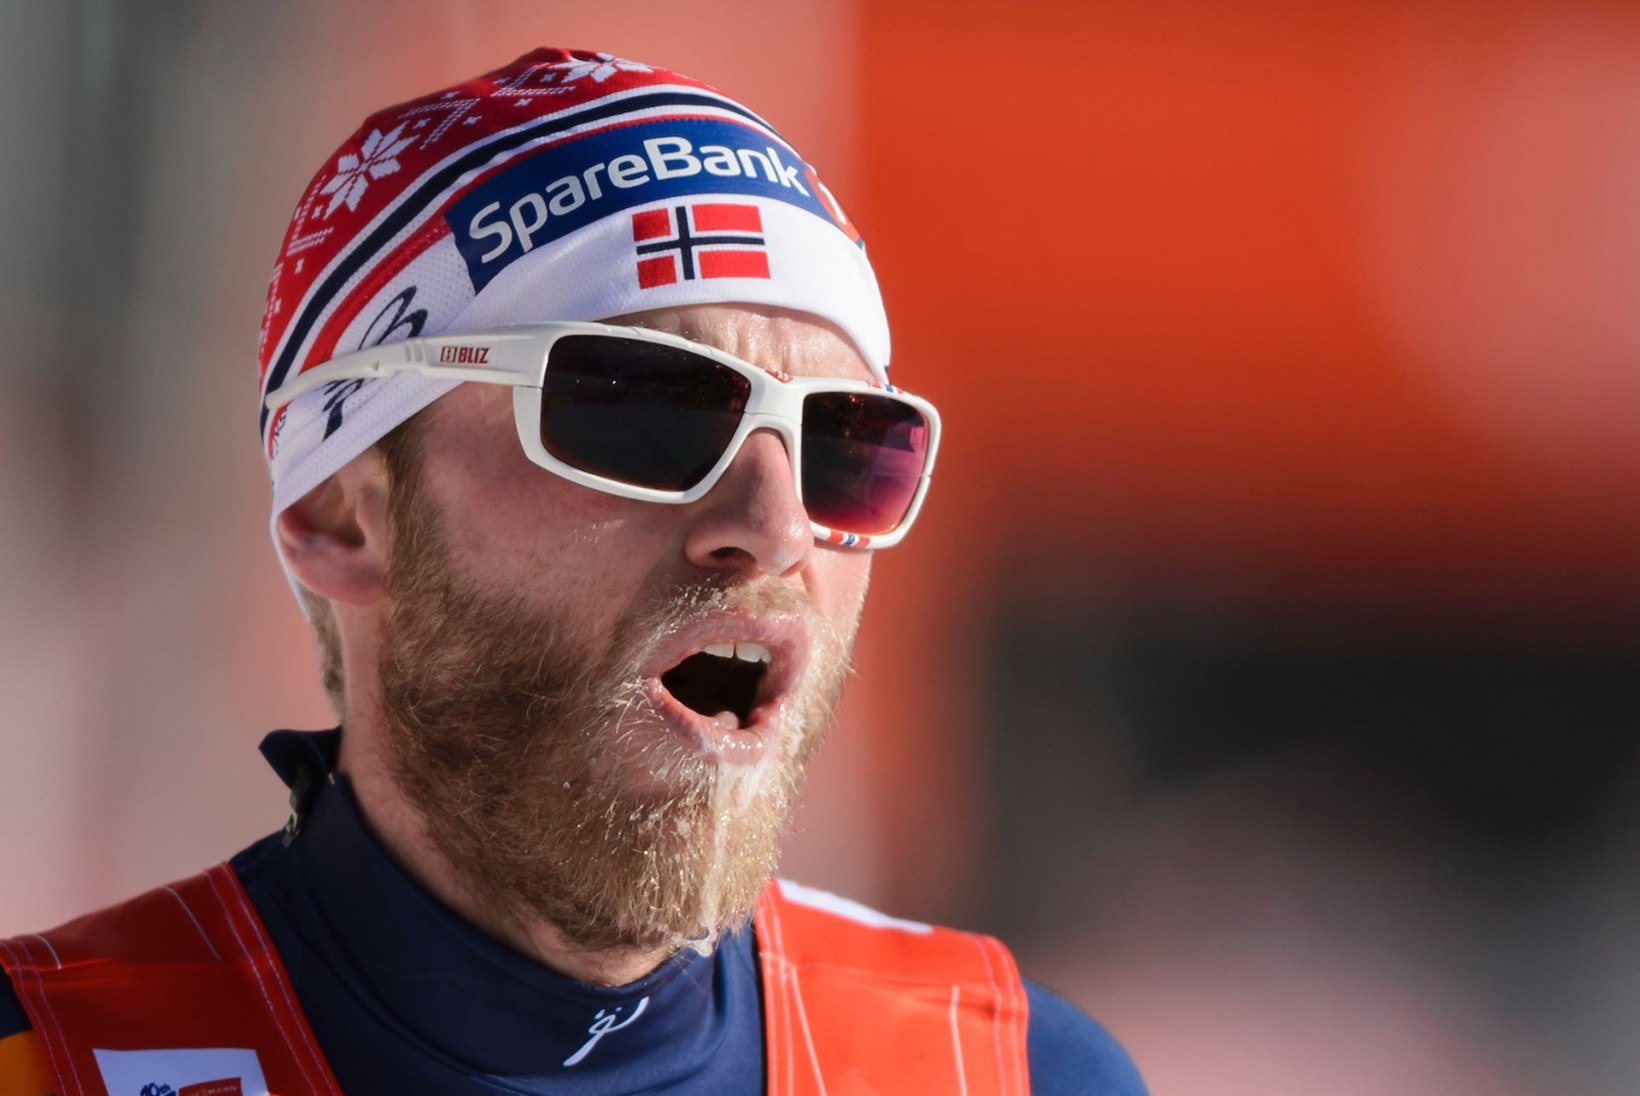 Tour de Ski norralasest üldliidrit segab astma: tunnen end kui pasahunnik